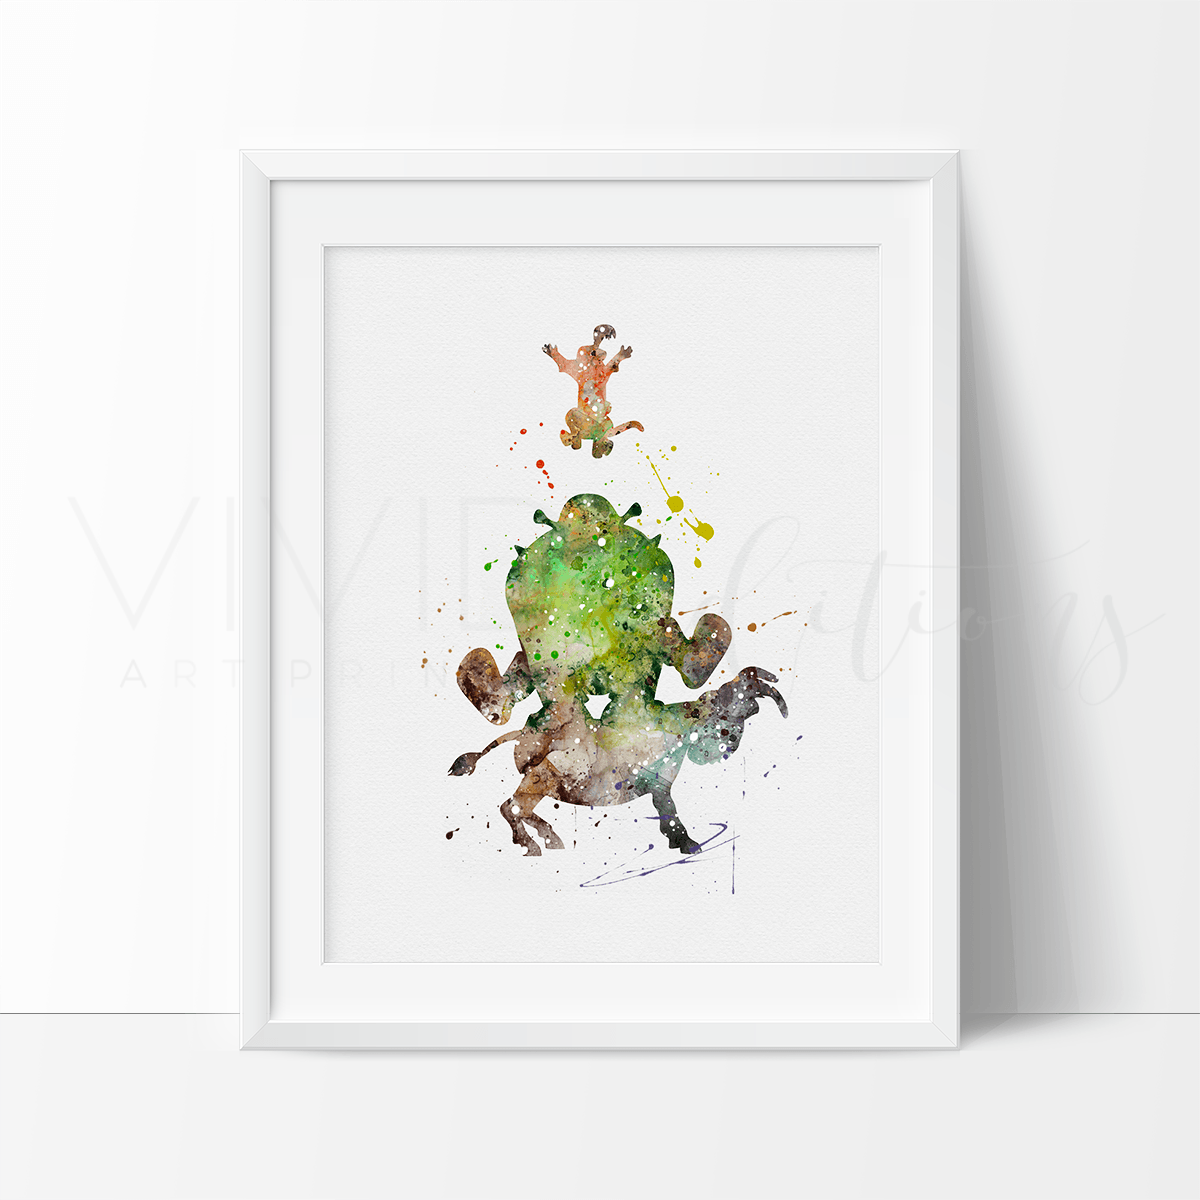 Shrek and Donkey, Puss in Boots Watercolor Art Print Print - VividEditions